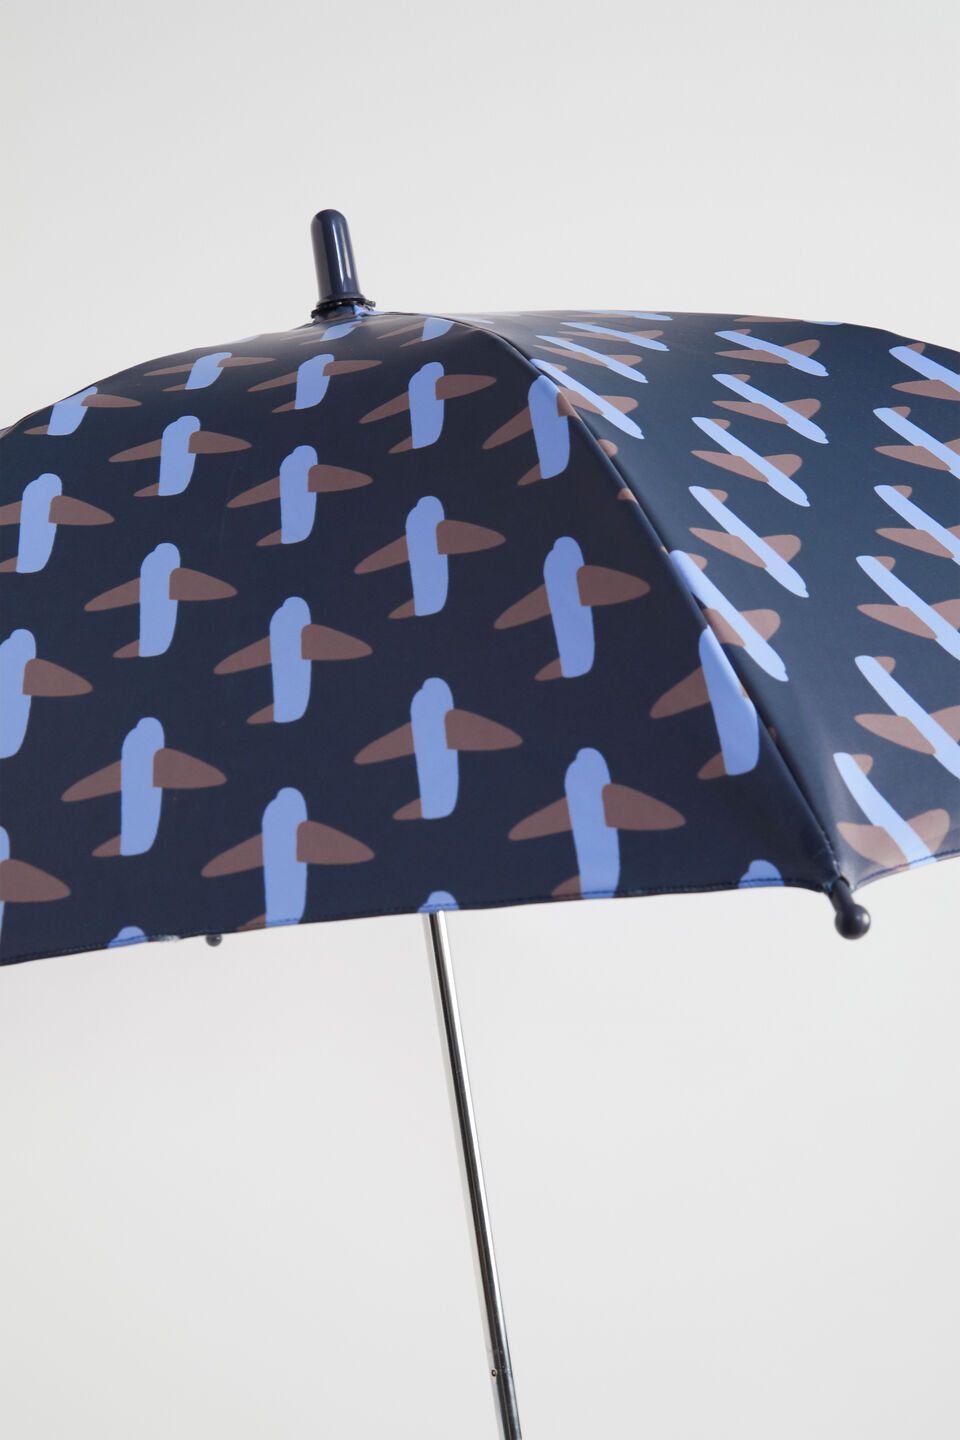 Aeroplane Umbrella  Multi